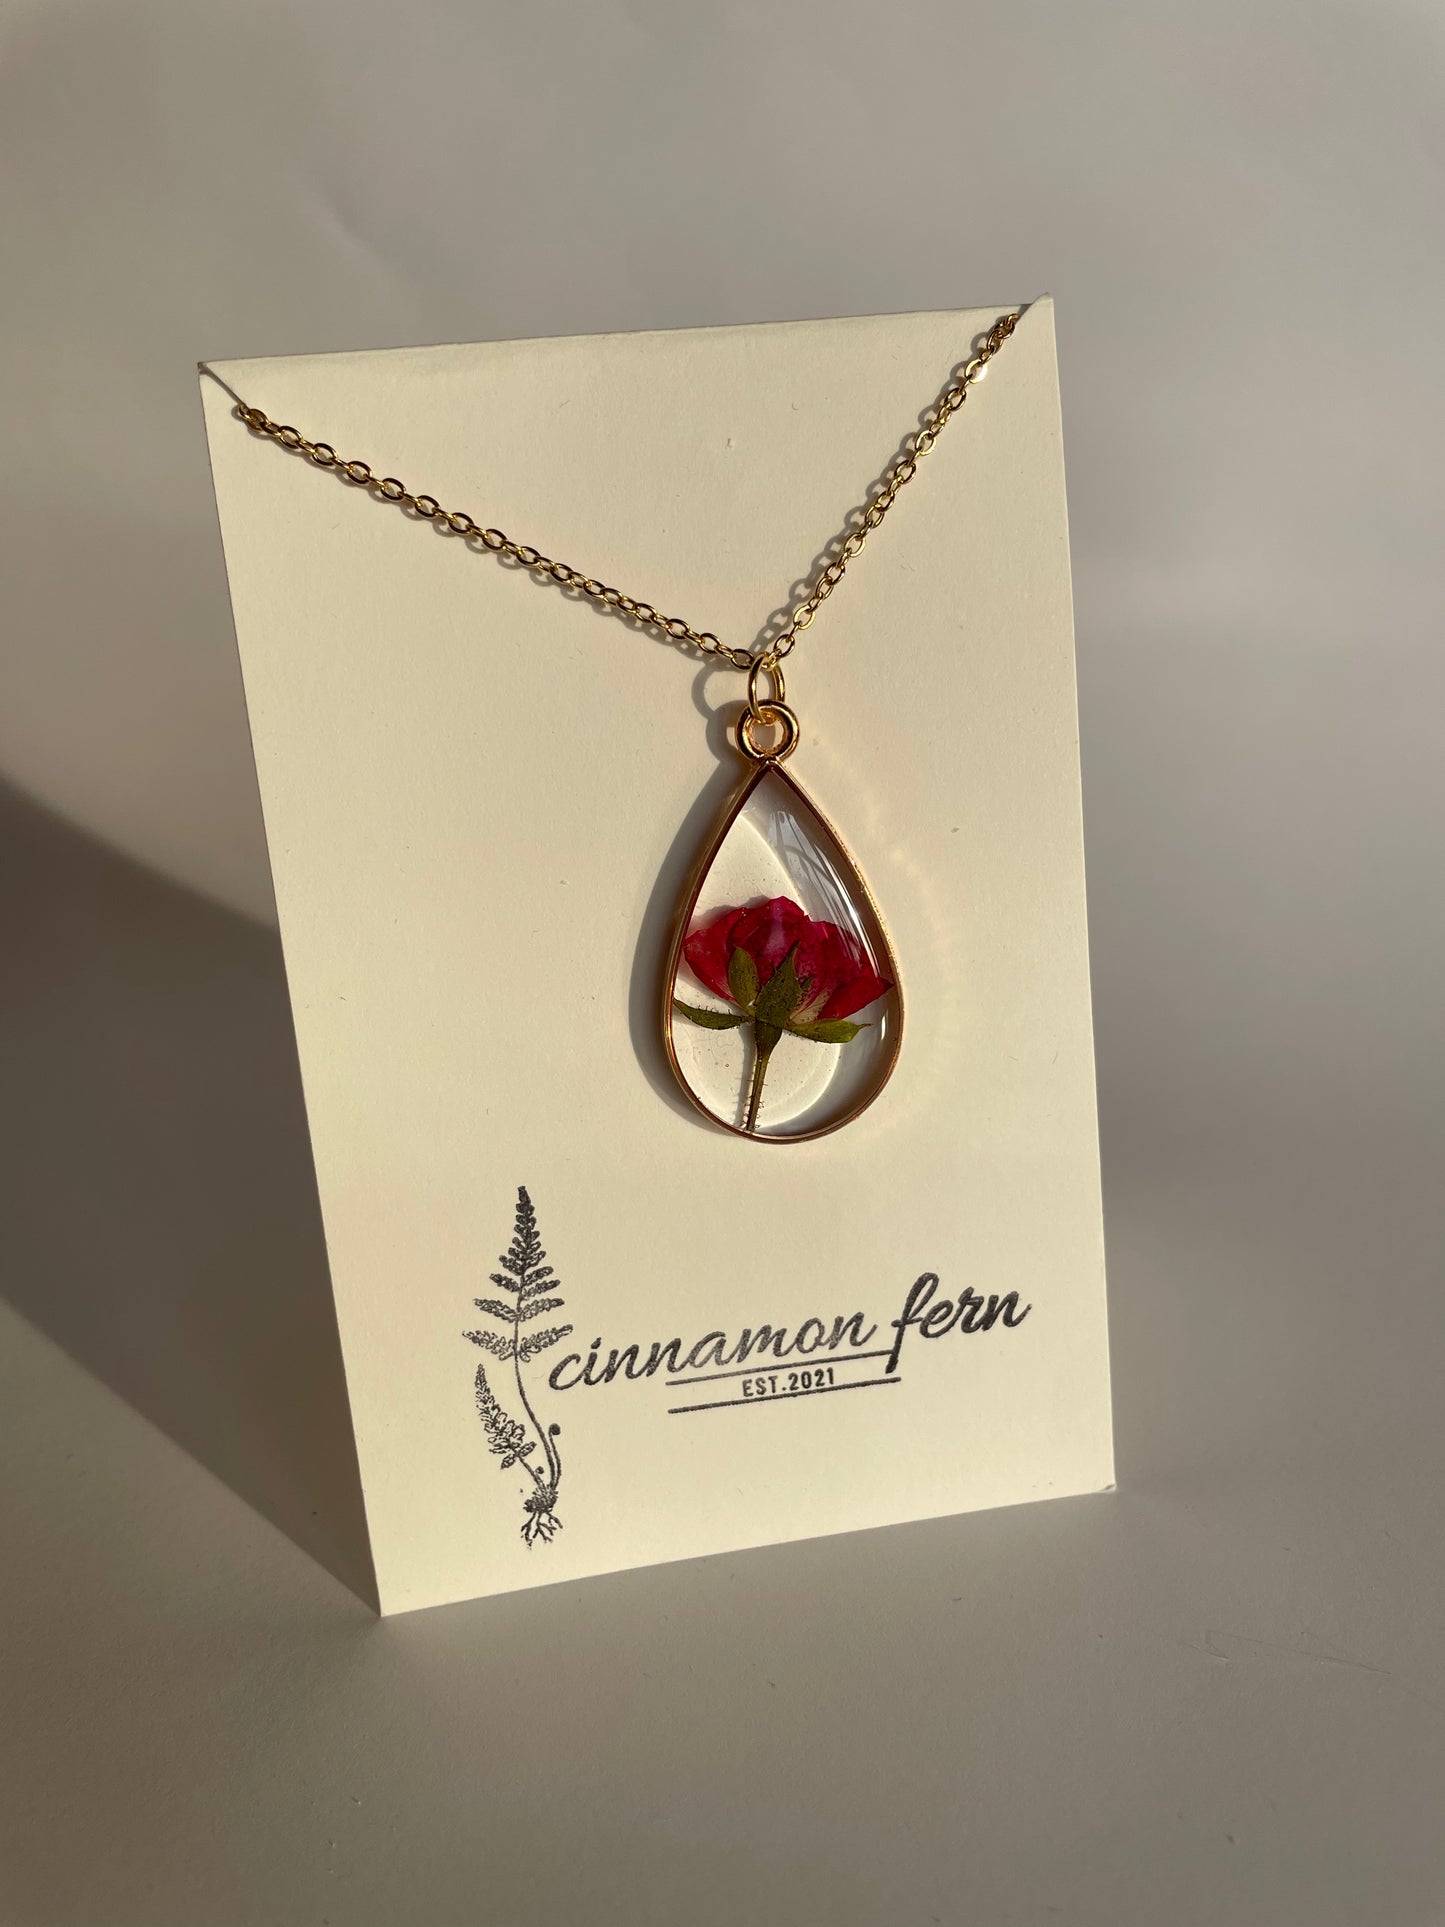 Cinnamon Fern: Resin Necklace